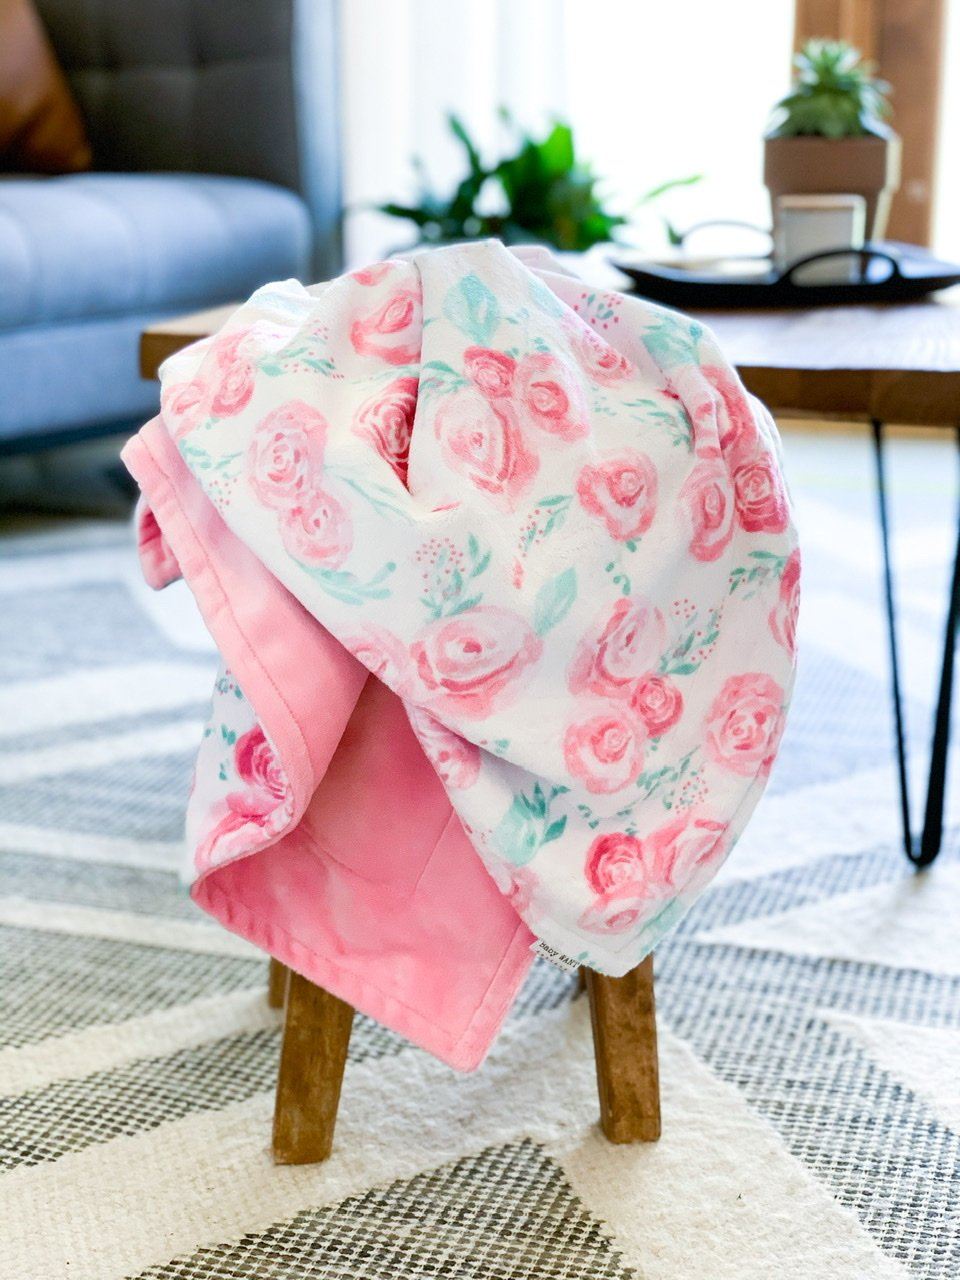 Minky Designs Luxurious Minky Blankets